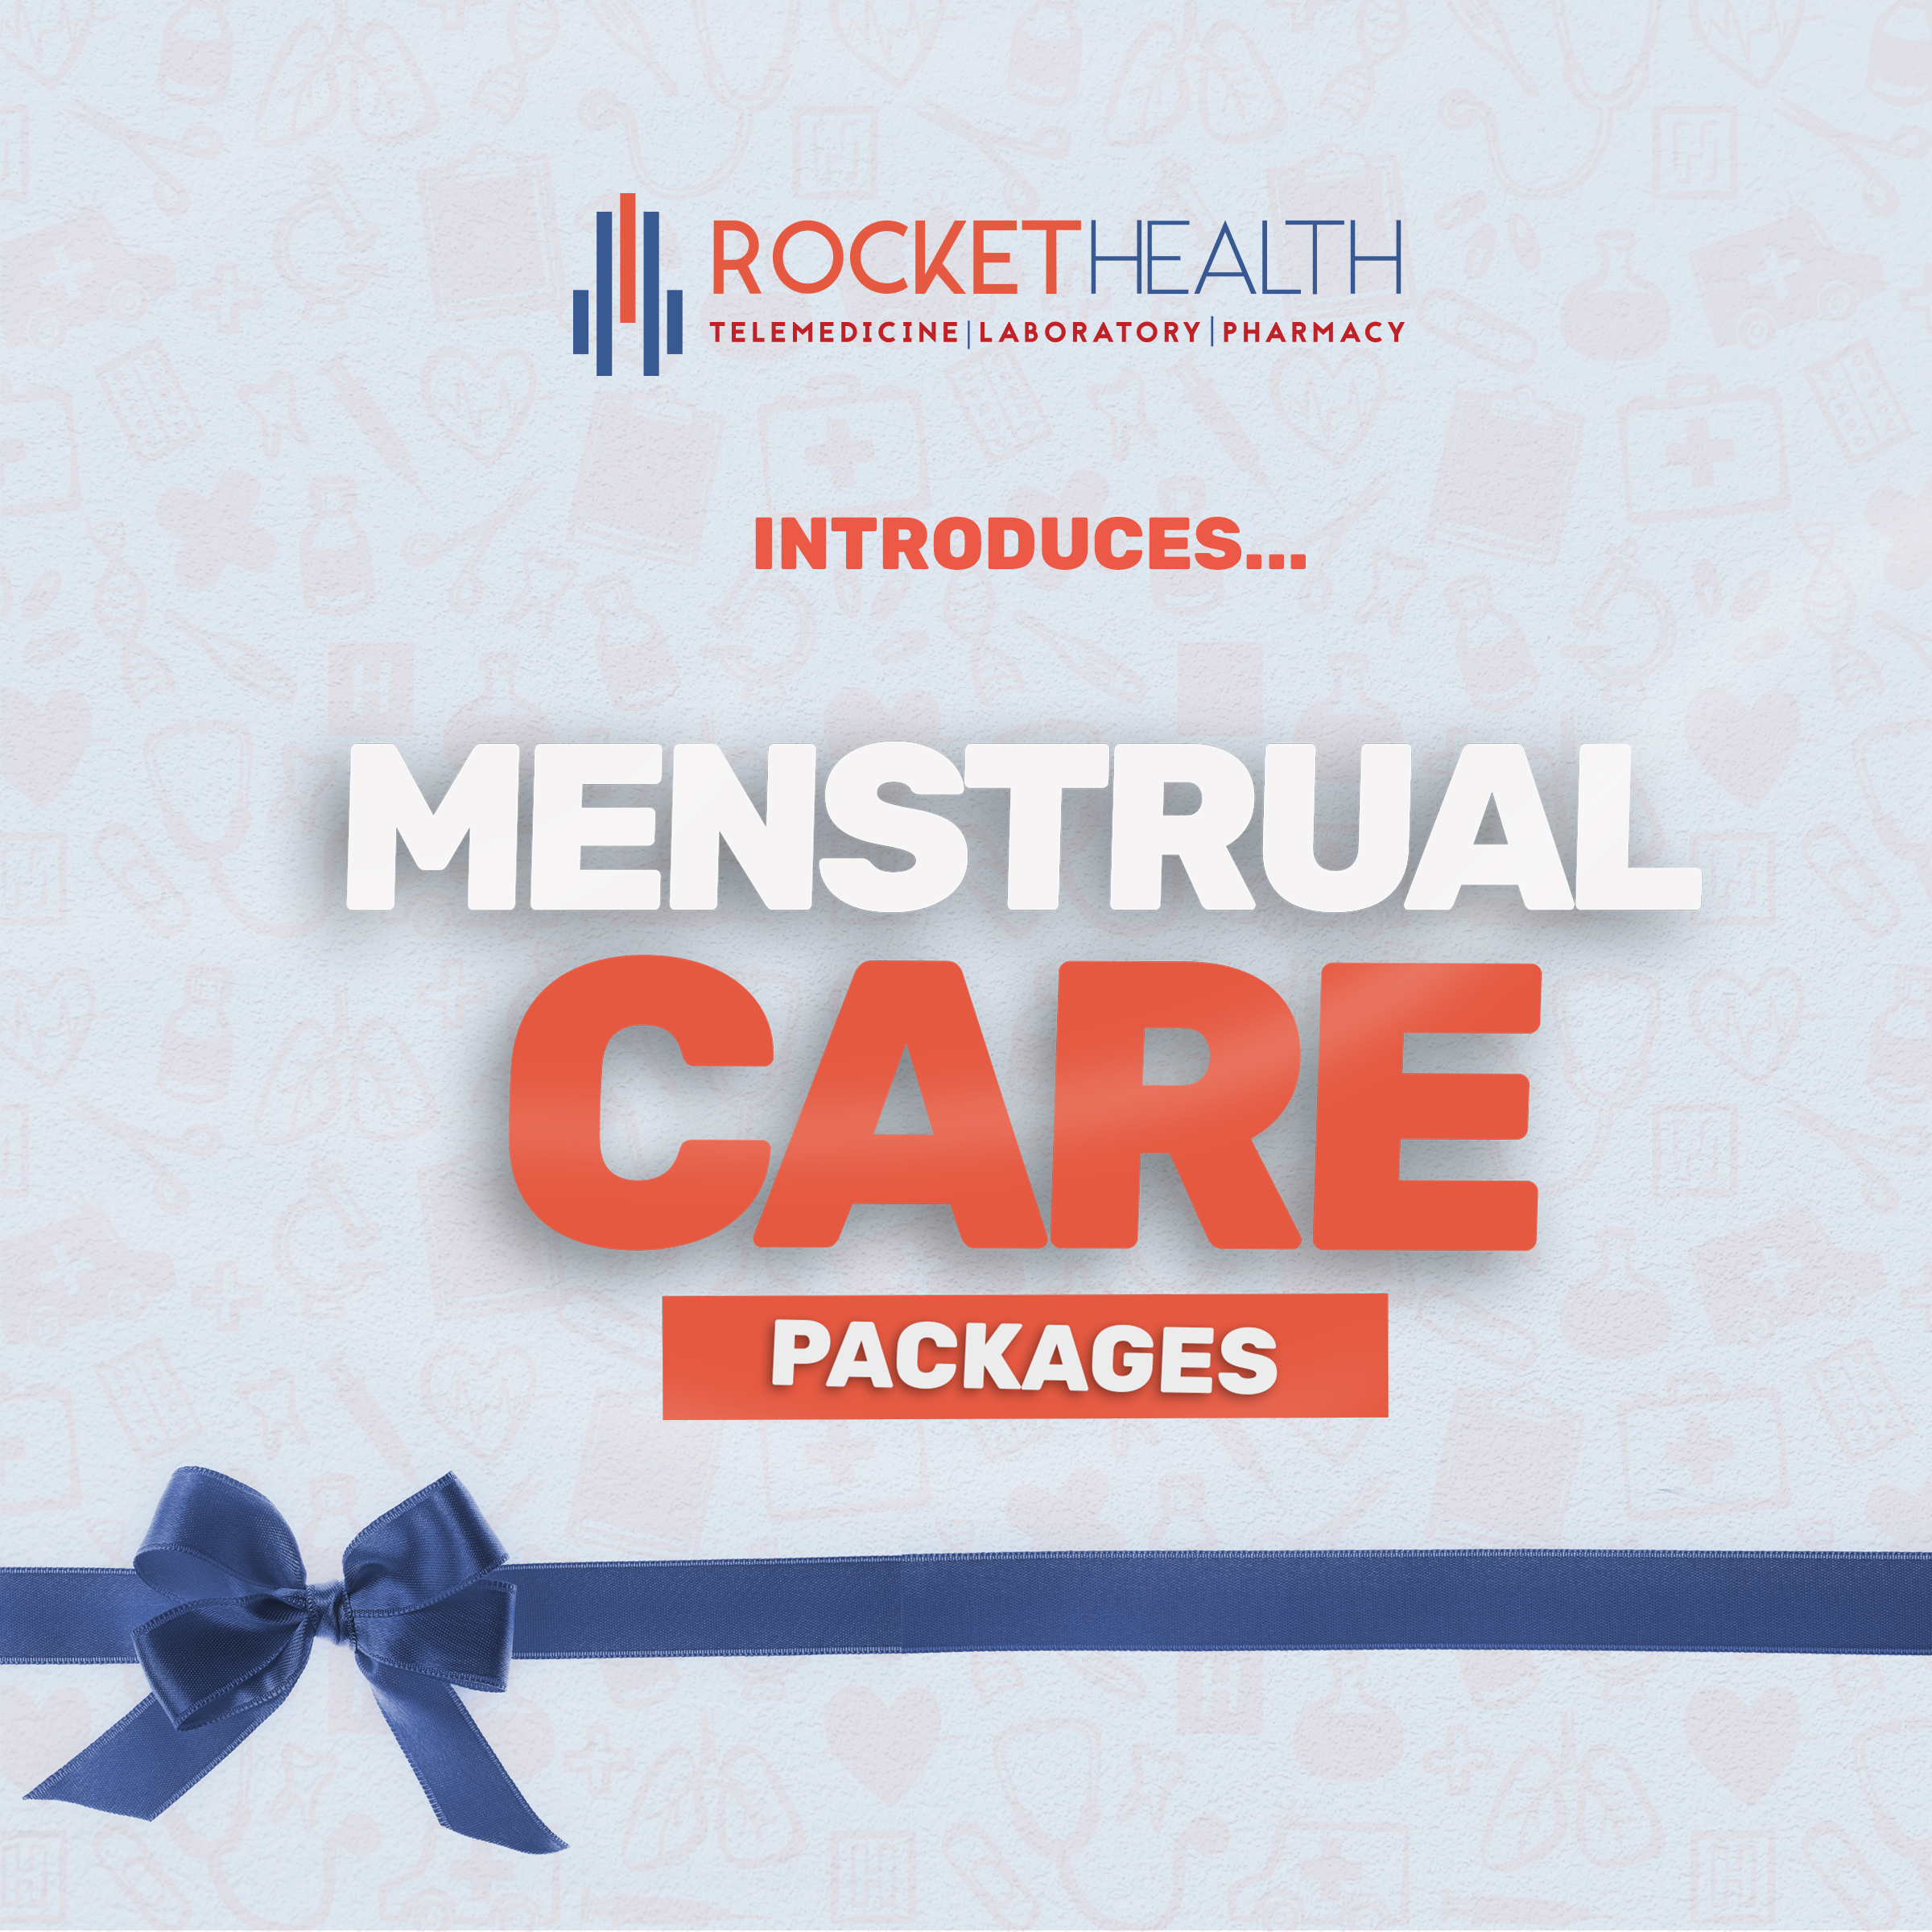 Rocket Health Menstrual Care